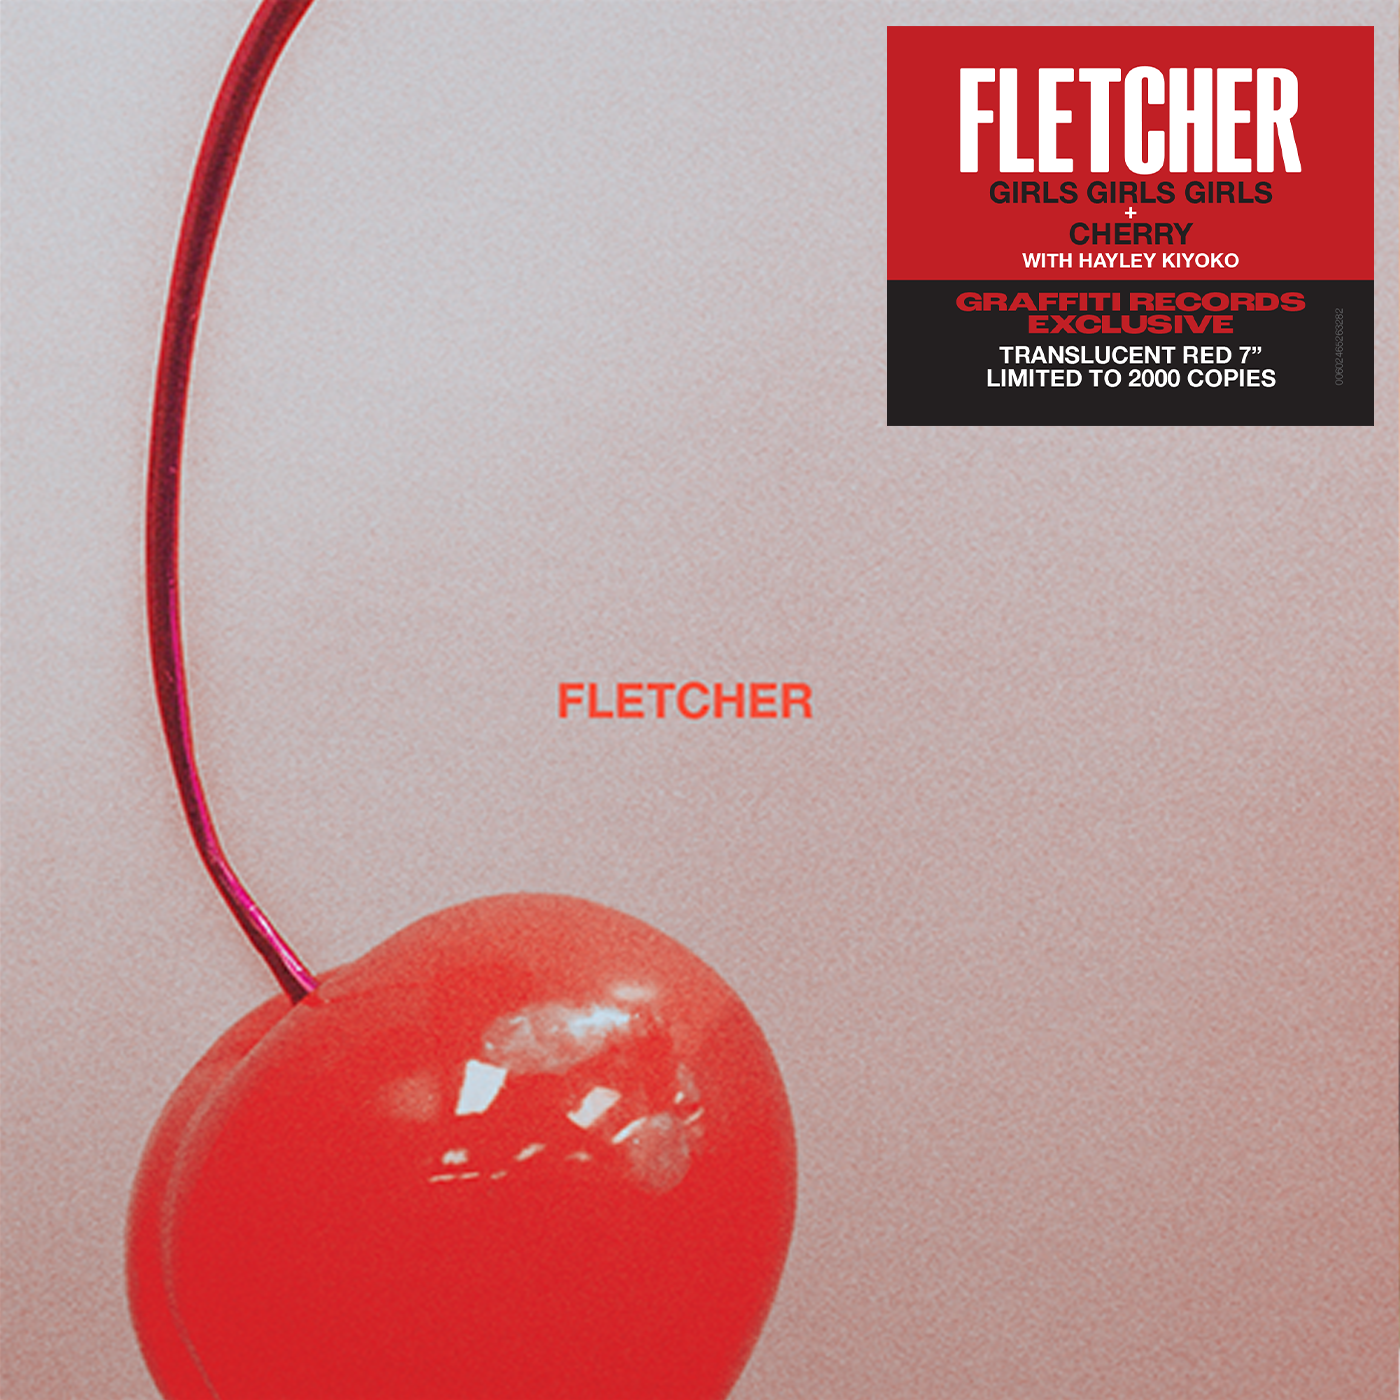 FLETCHER - girls girls girls / Cherry 7" (Graffiti Records Exclusive)